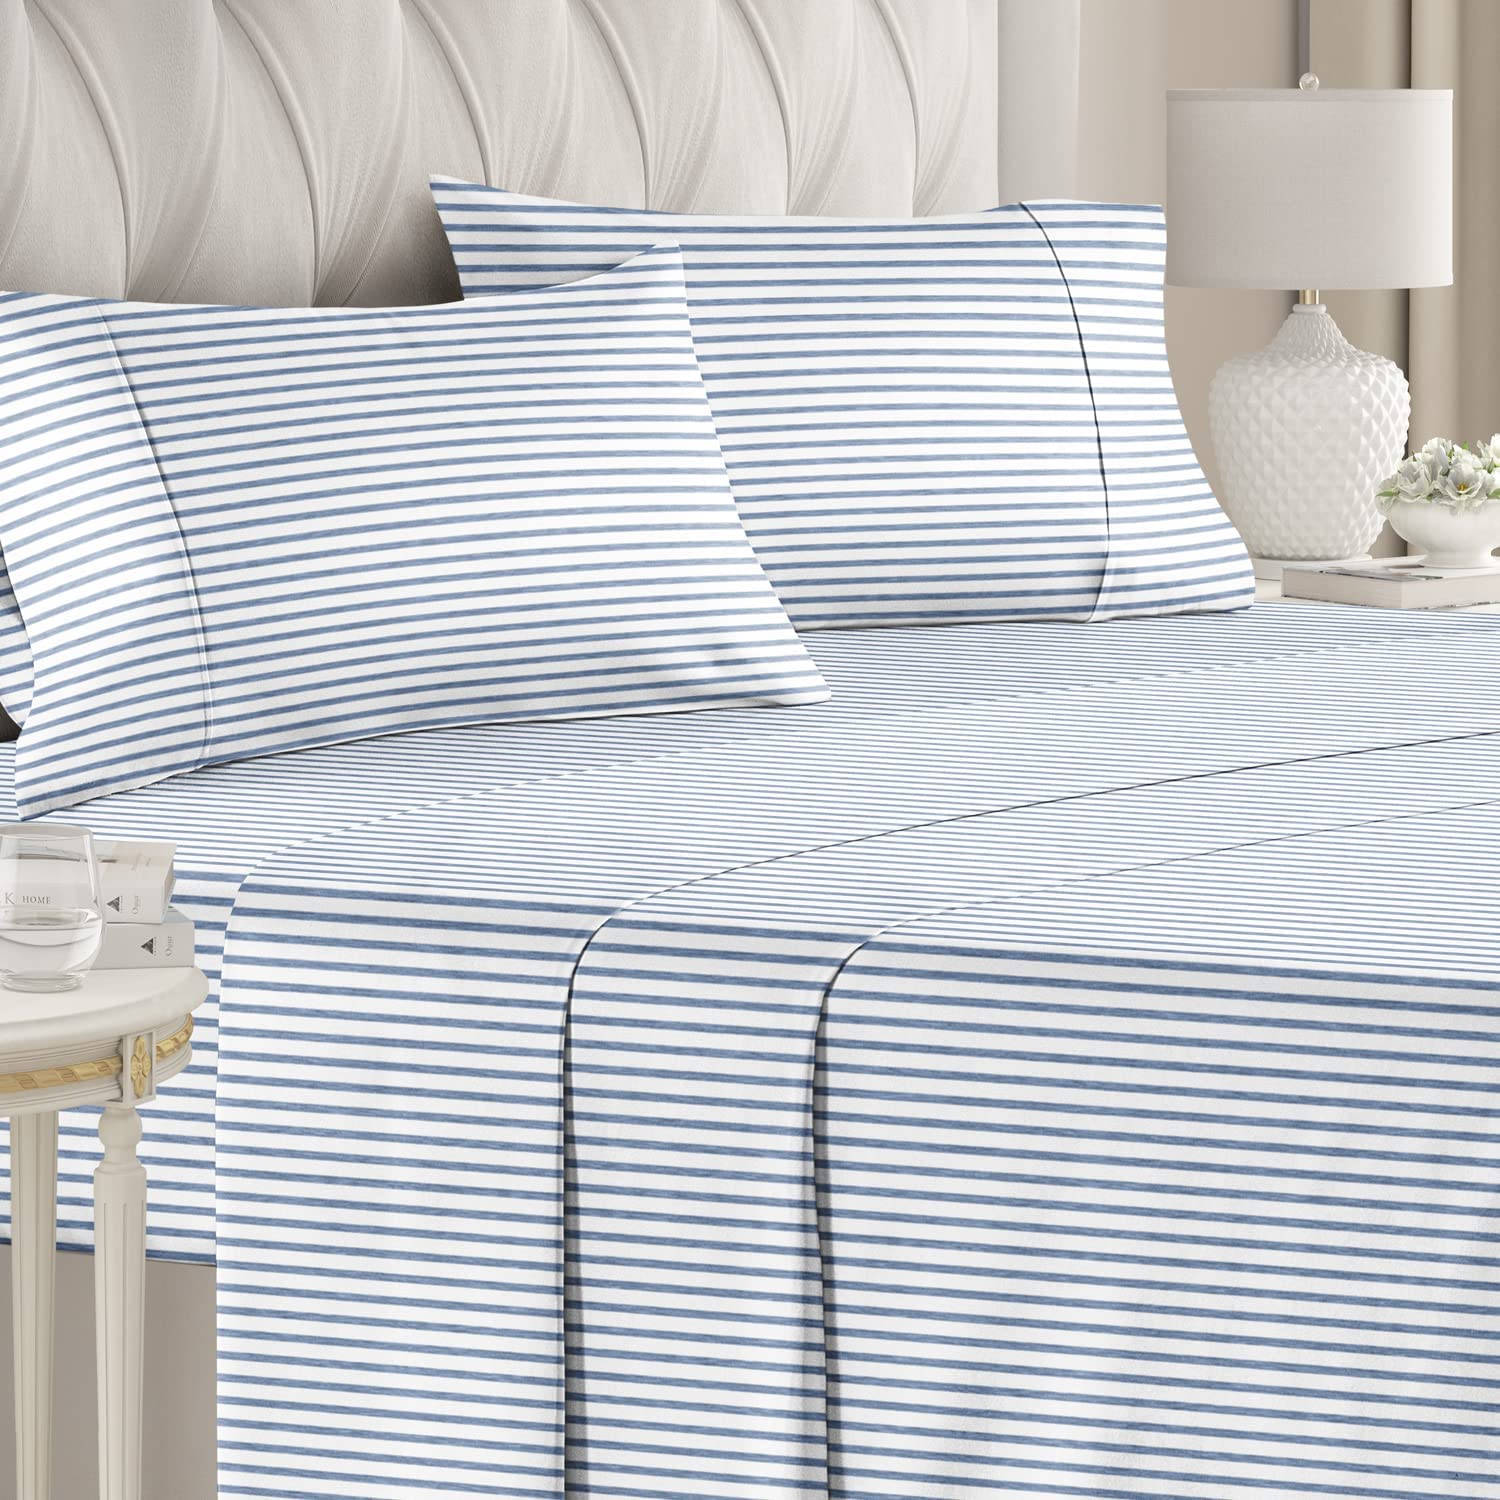 4 Piece Striped Sheet Set - Blue